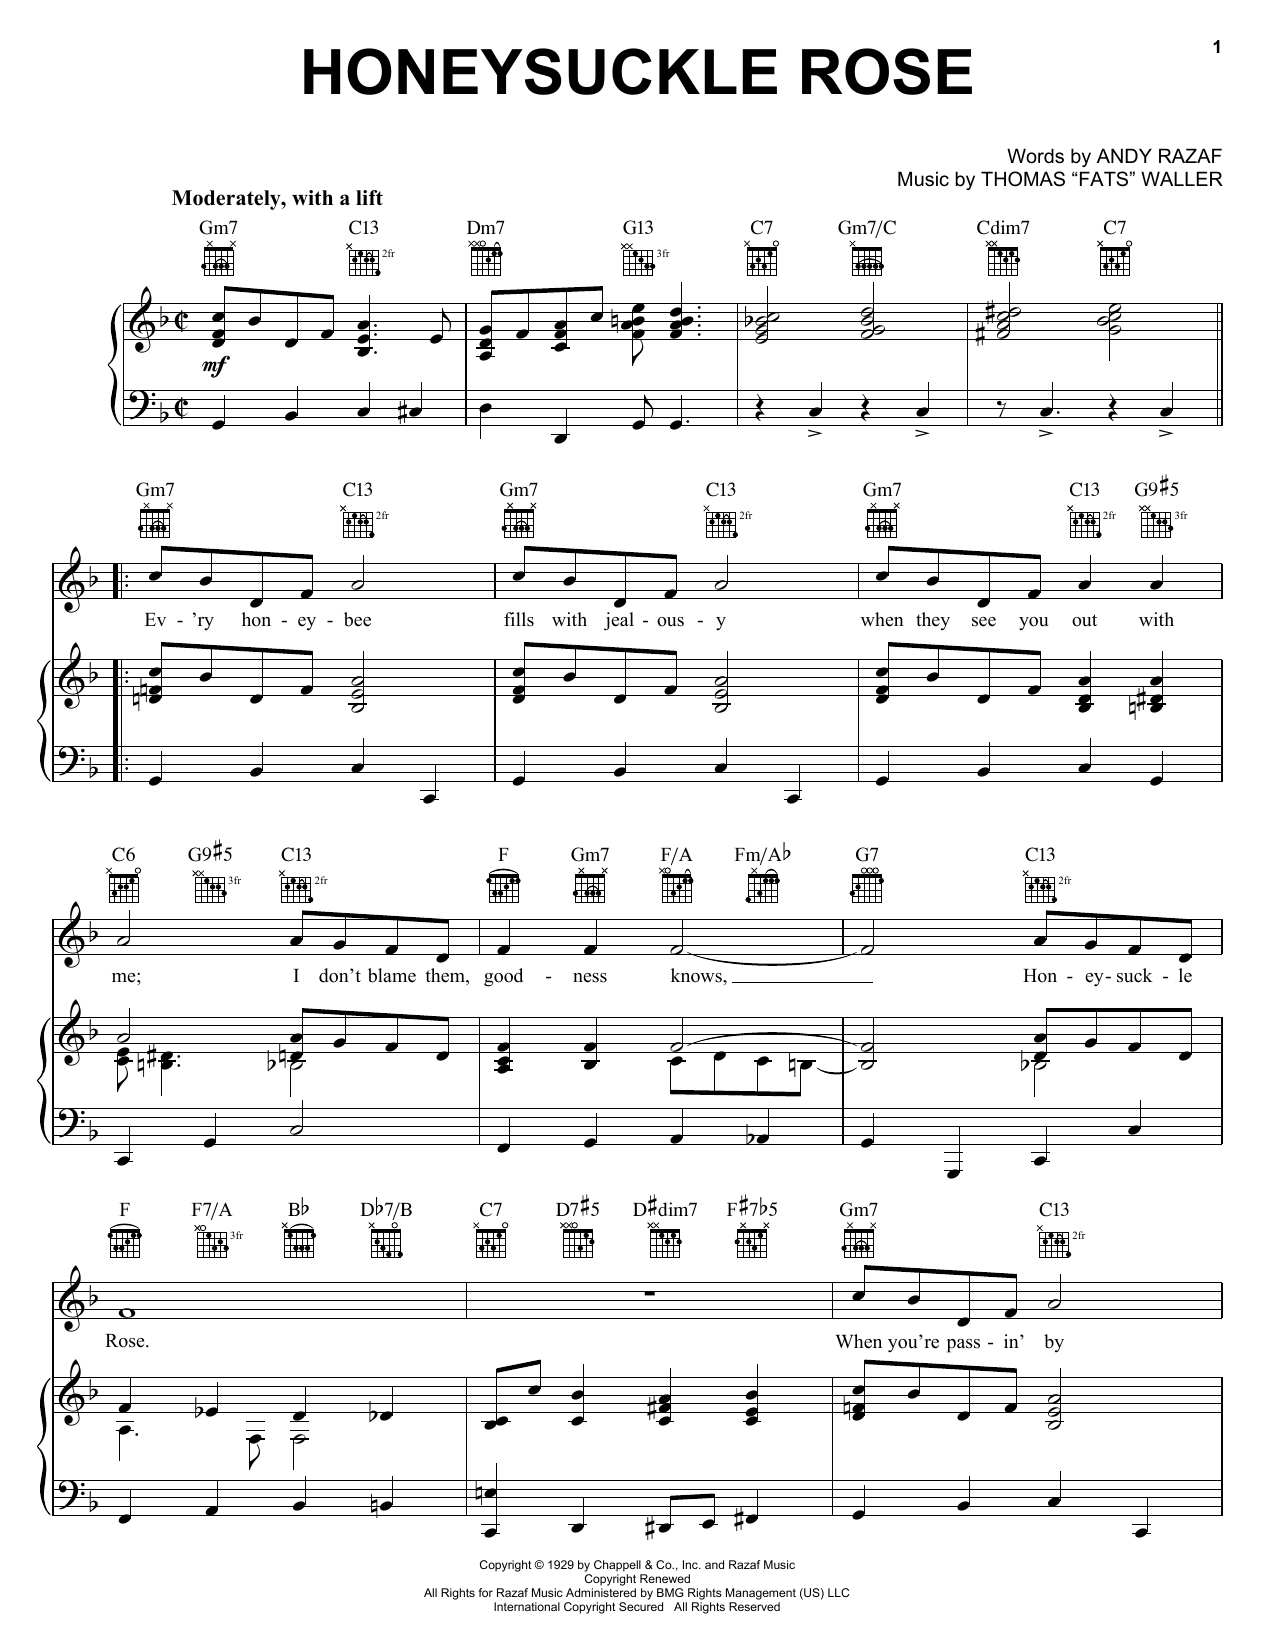 Django Reinhardt Honeysuckle Rose Sheet Music Notes & Chords for Guitar Tab Play-Along - Download or Print PDF